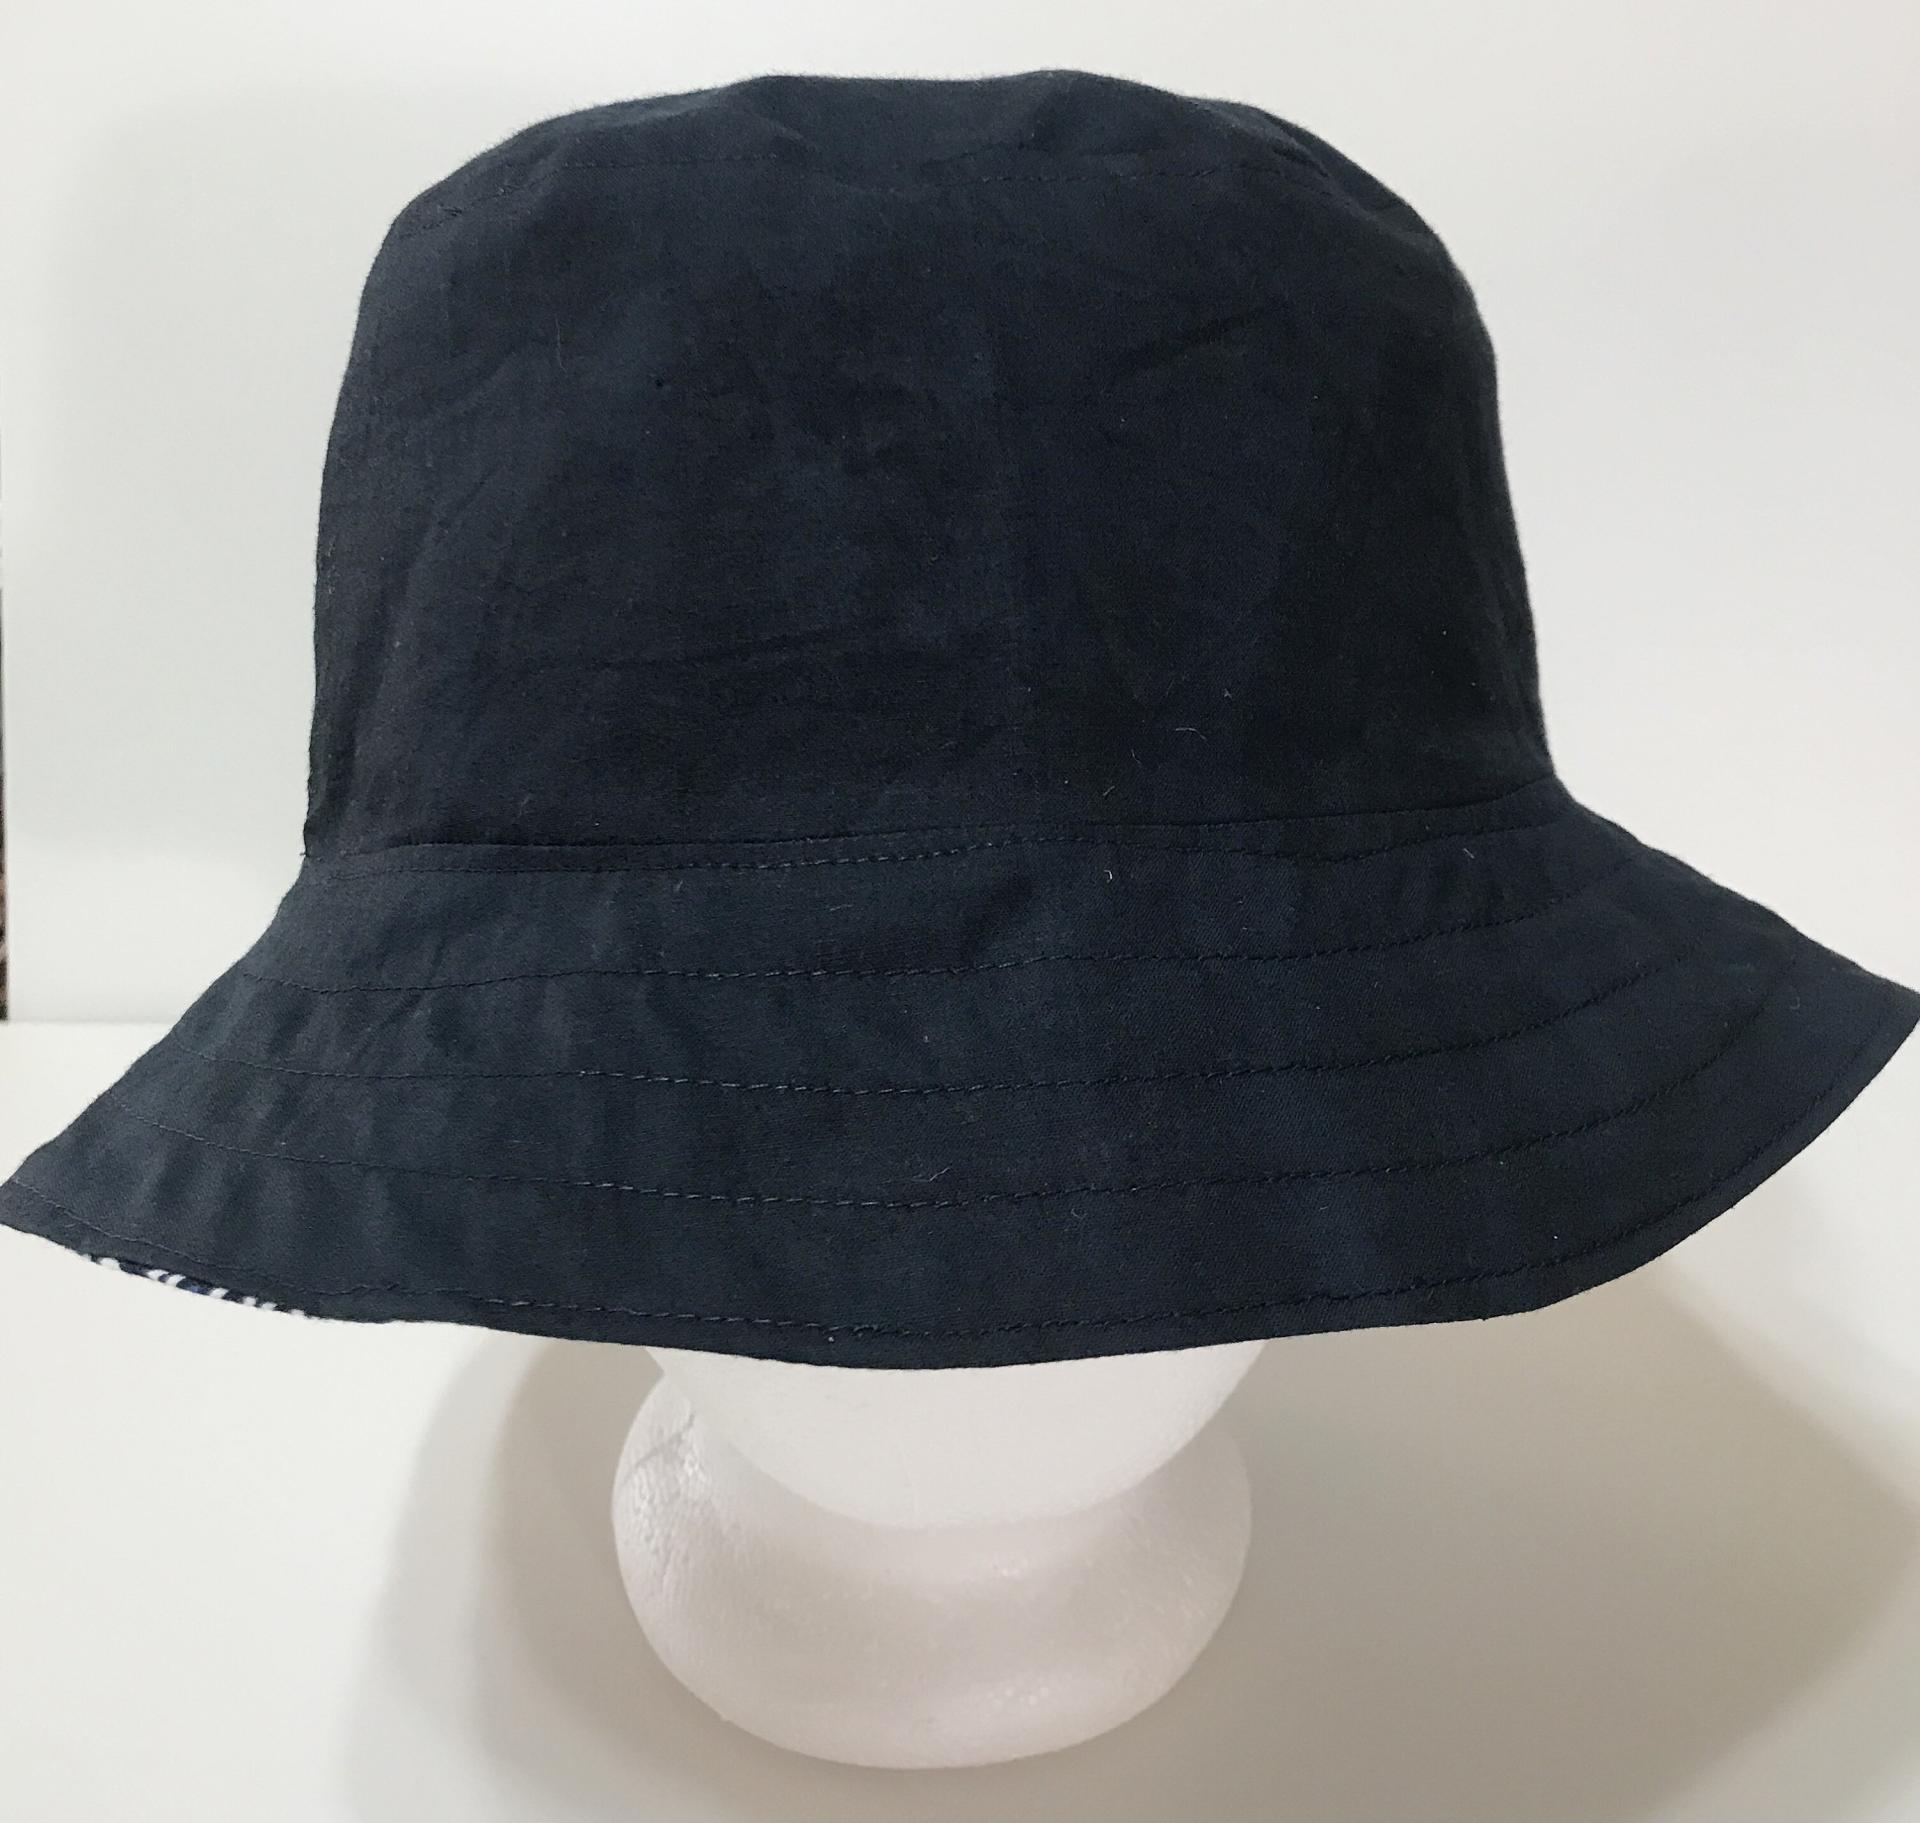 Columbus Blue Jackets Bucket Hat, Handmade, Reversible, Unisex Sizes S-XXL, hockey, ponytail summer hat, fishing hat, sun hat, floppy hat